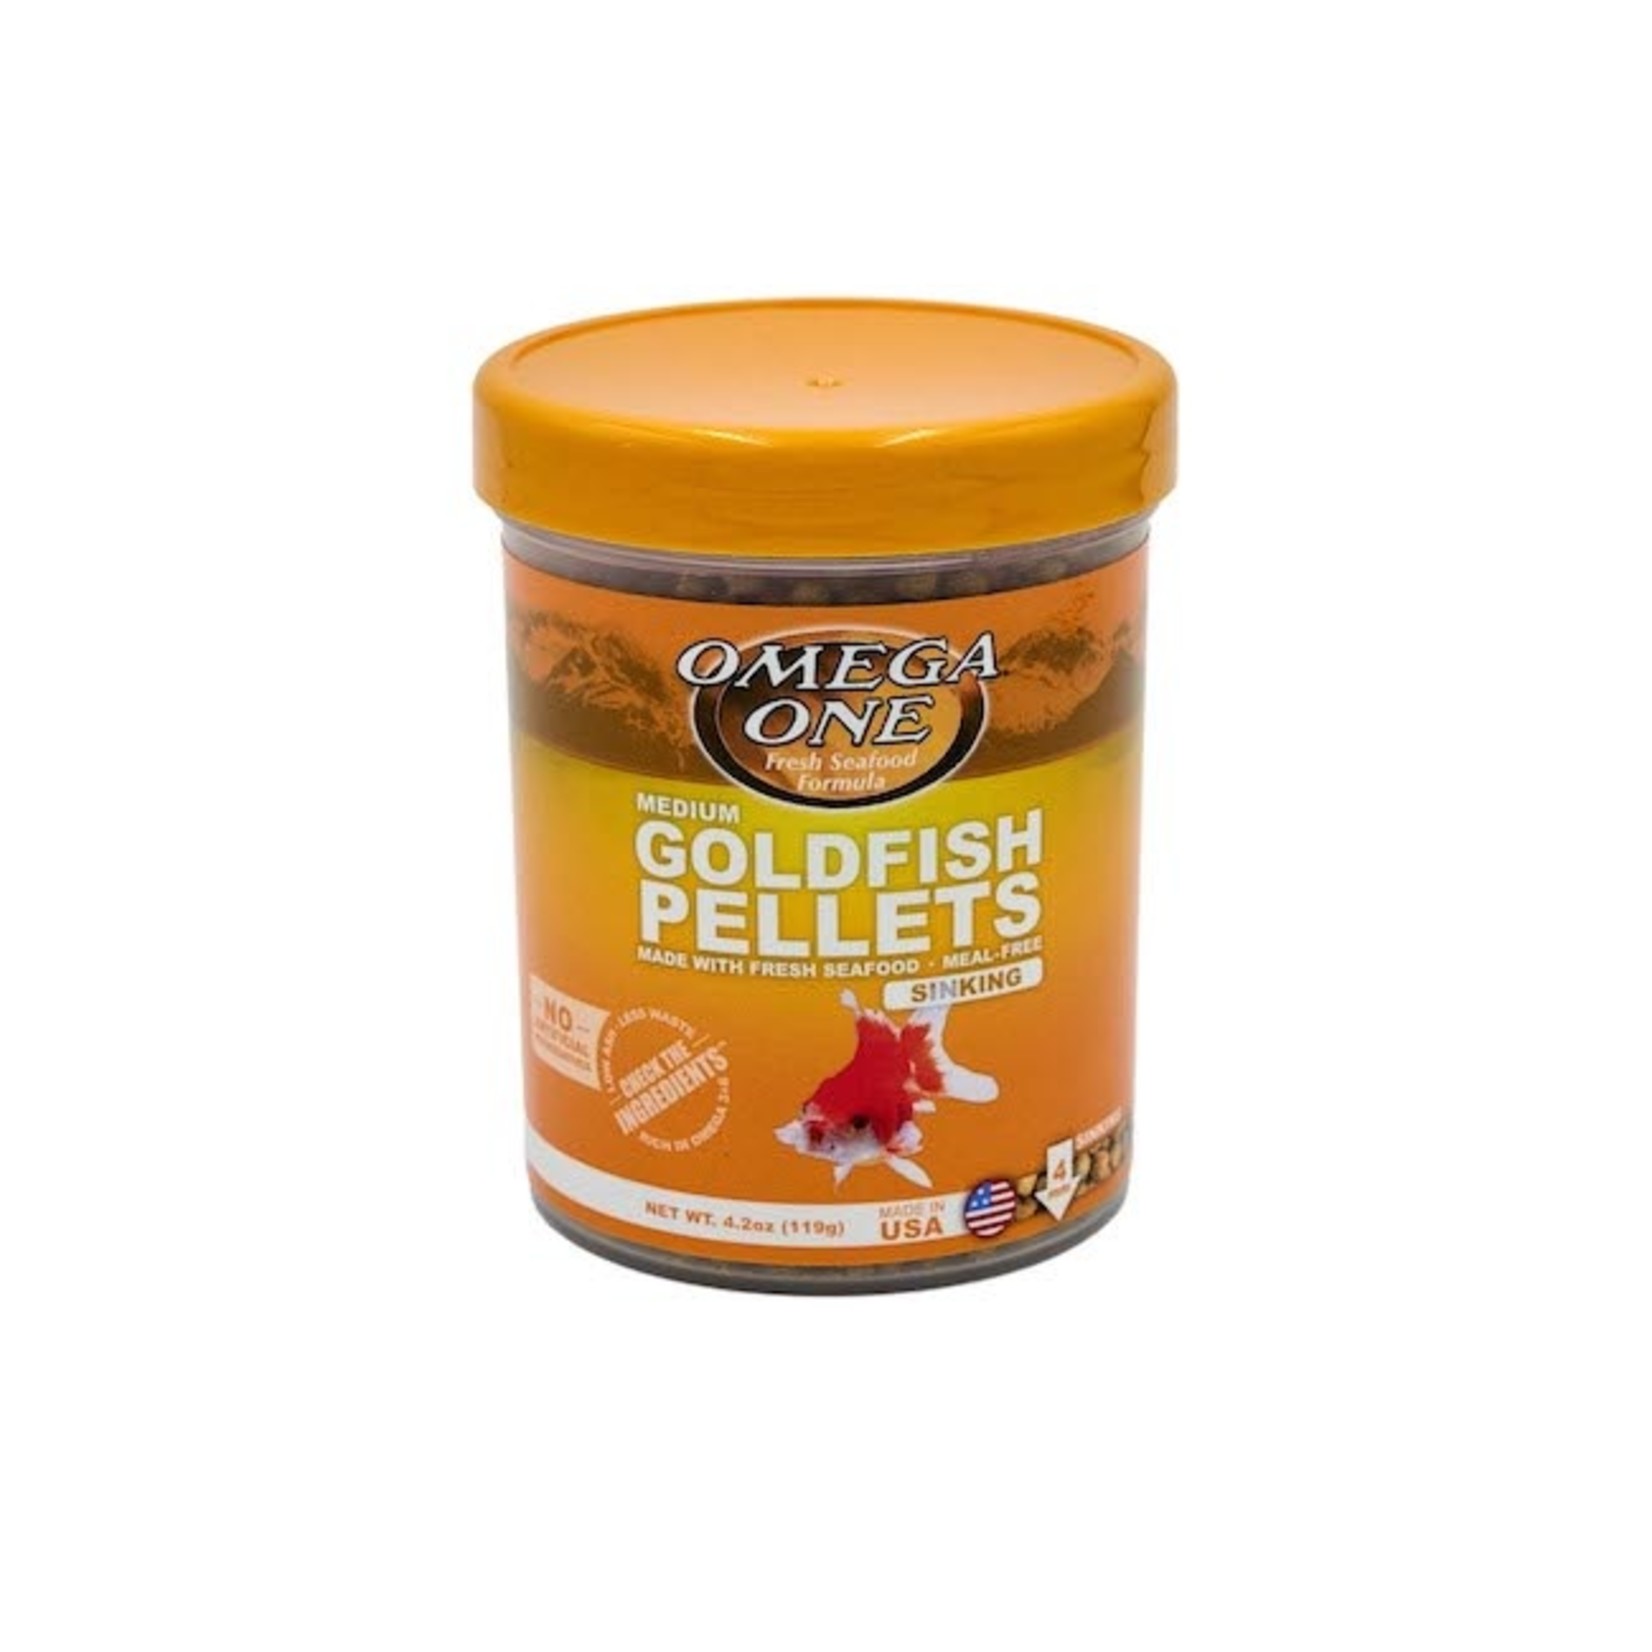 Omega One Goldfish Pellets Medium